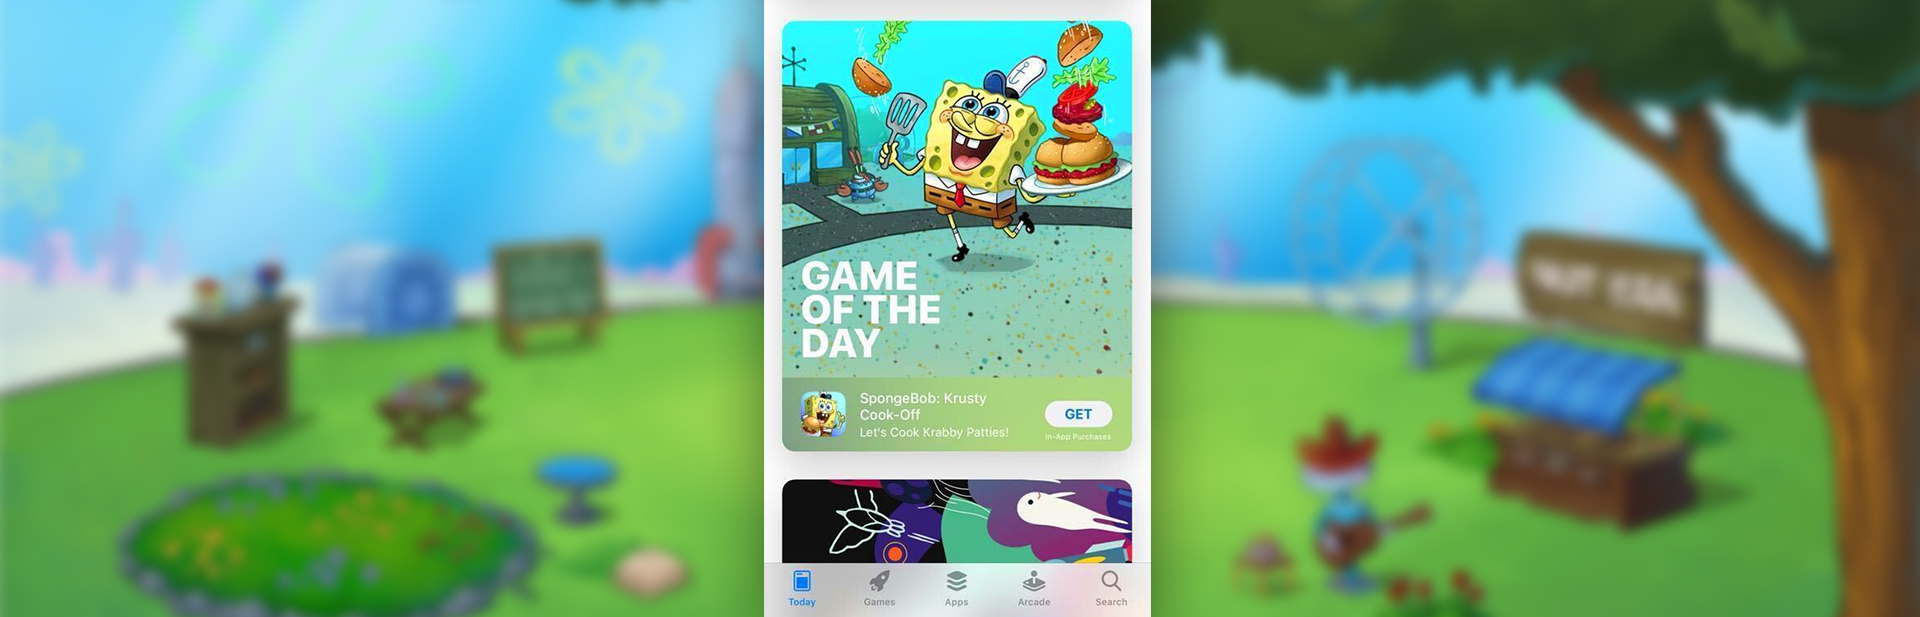 spongebob flip or flop game online no download